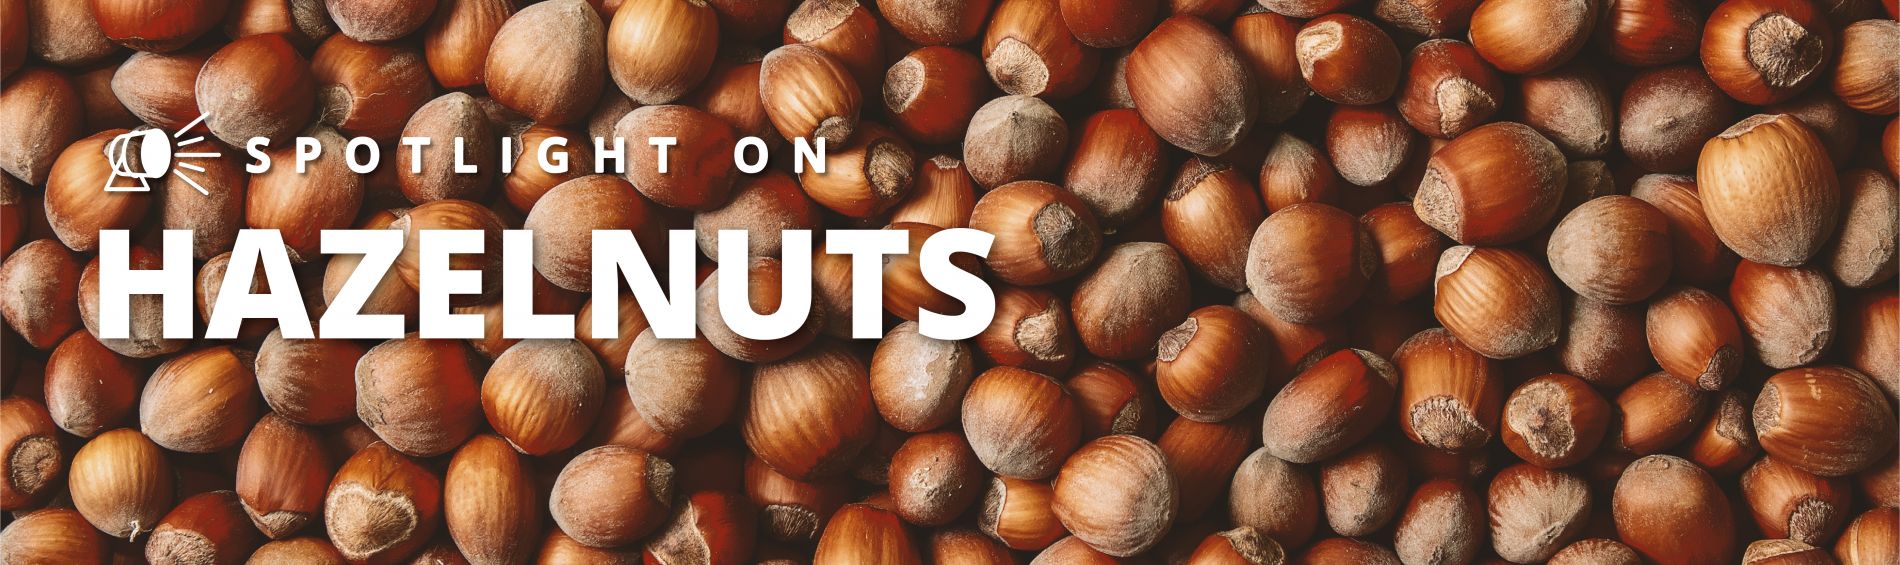 Spotlight Series on Hazelnuts